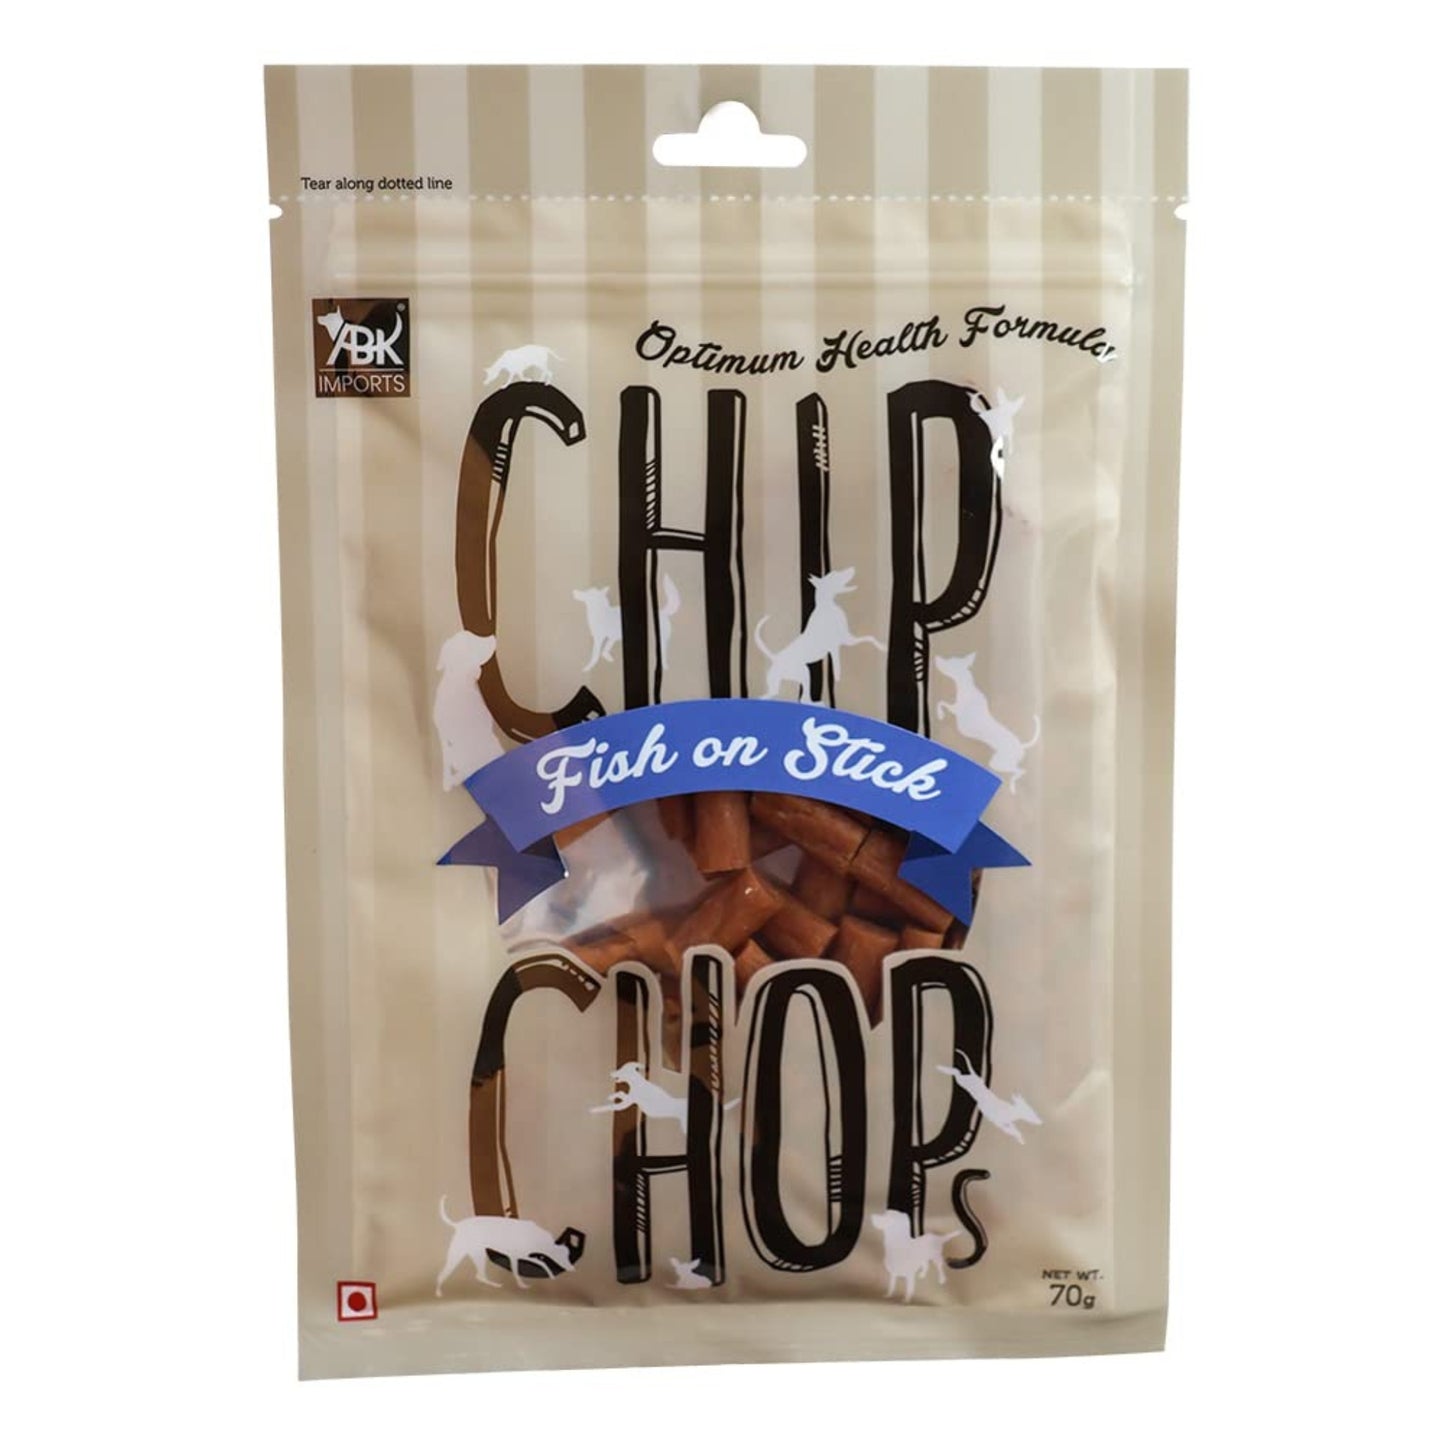 Chip Chops Dog Treats - Fish on Stick (70gm)